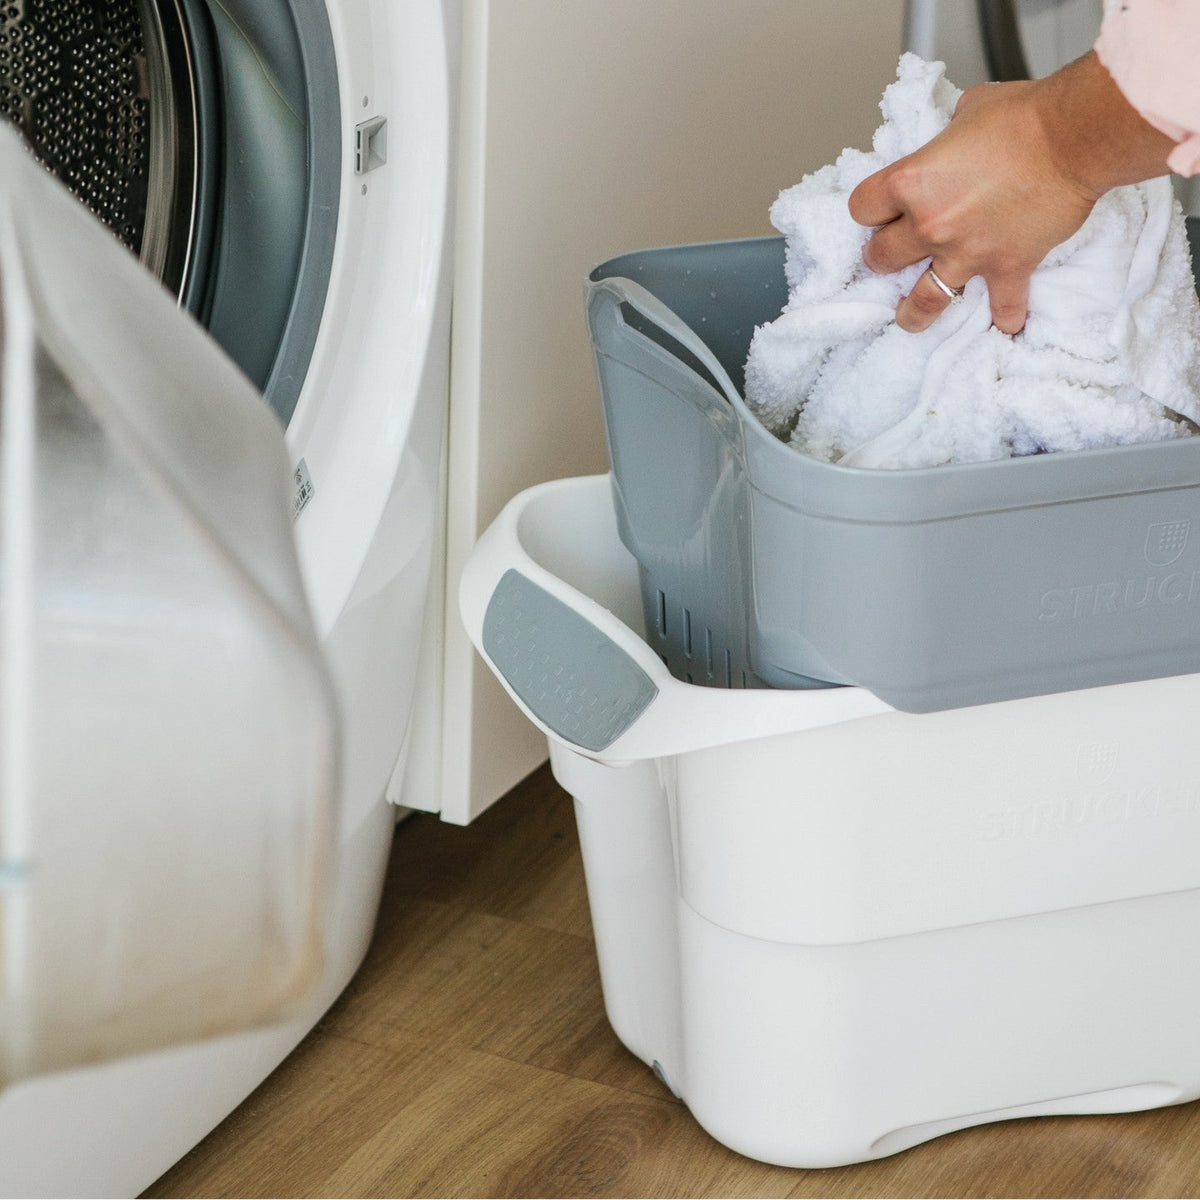 Laundry Soaking Wash Bucket with Strainer - Strucket